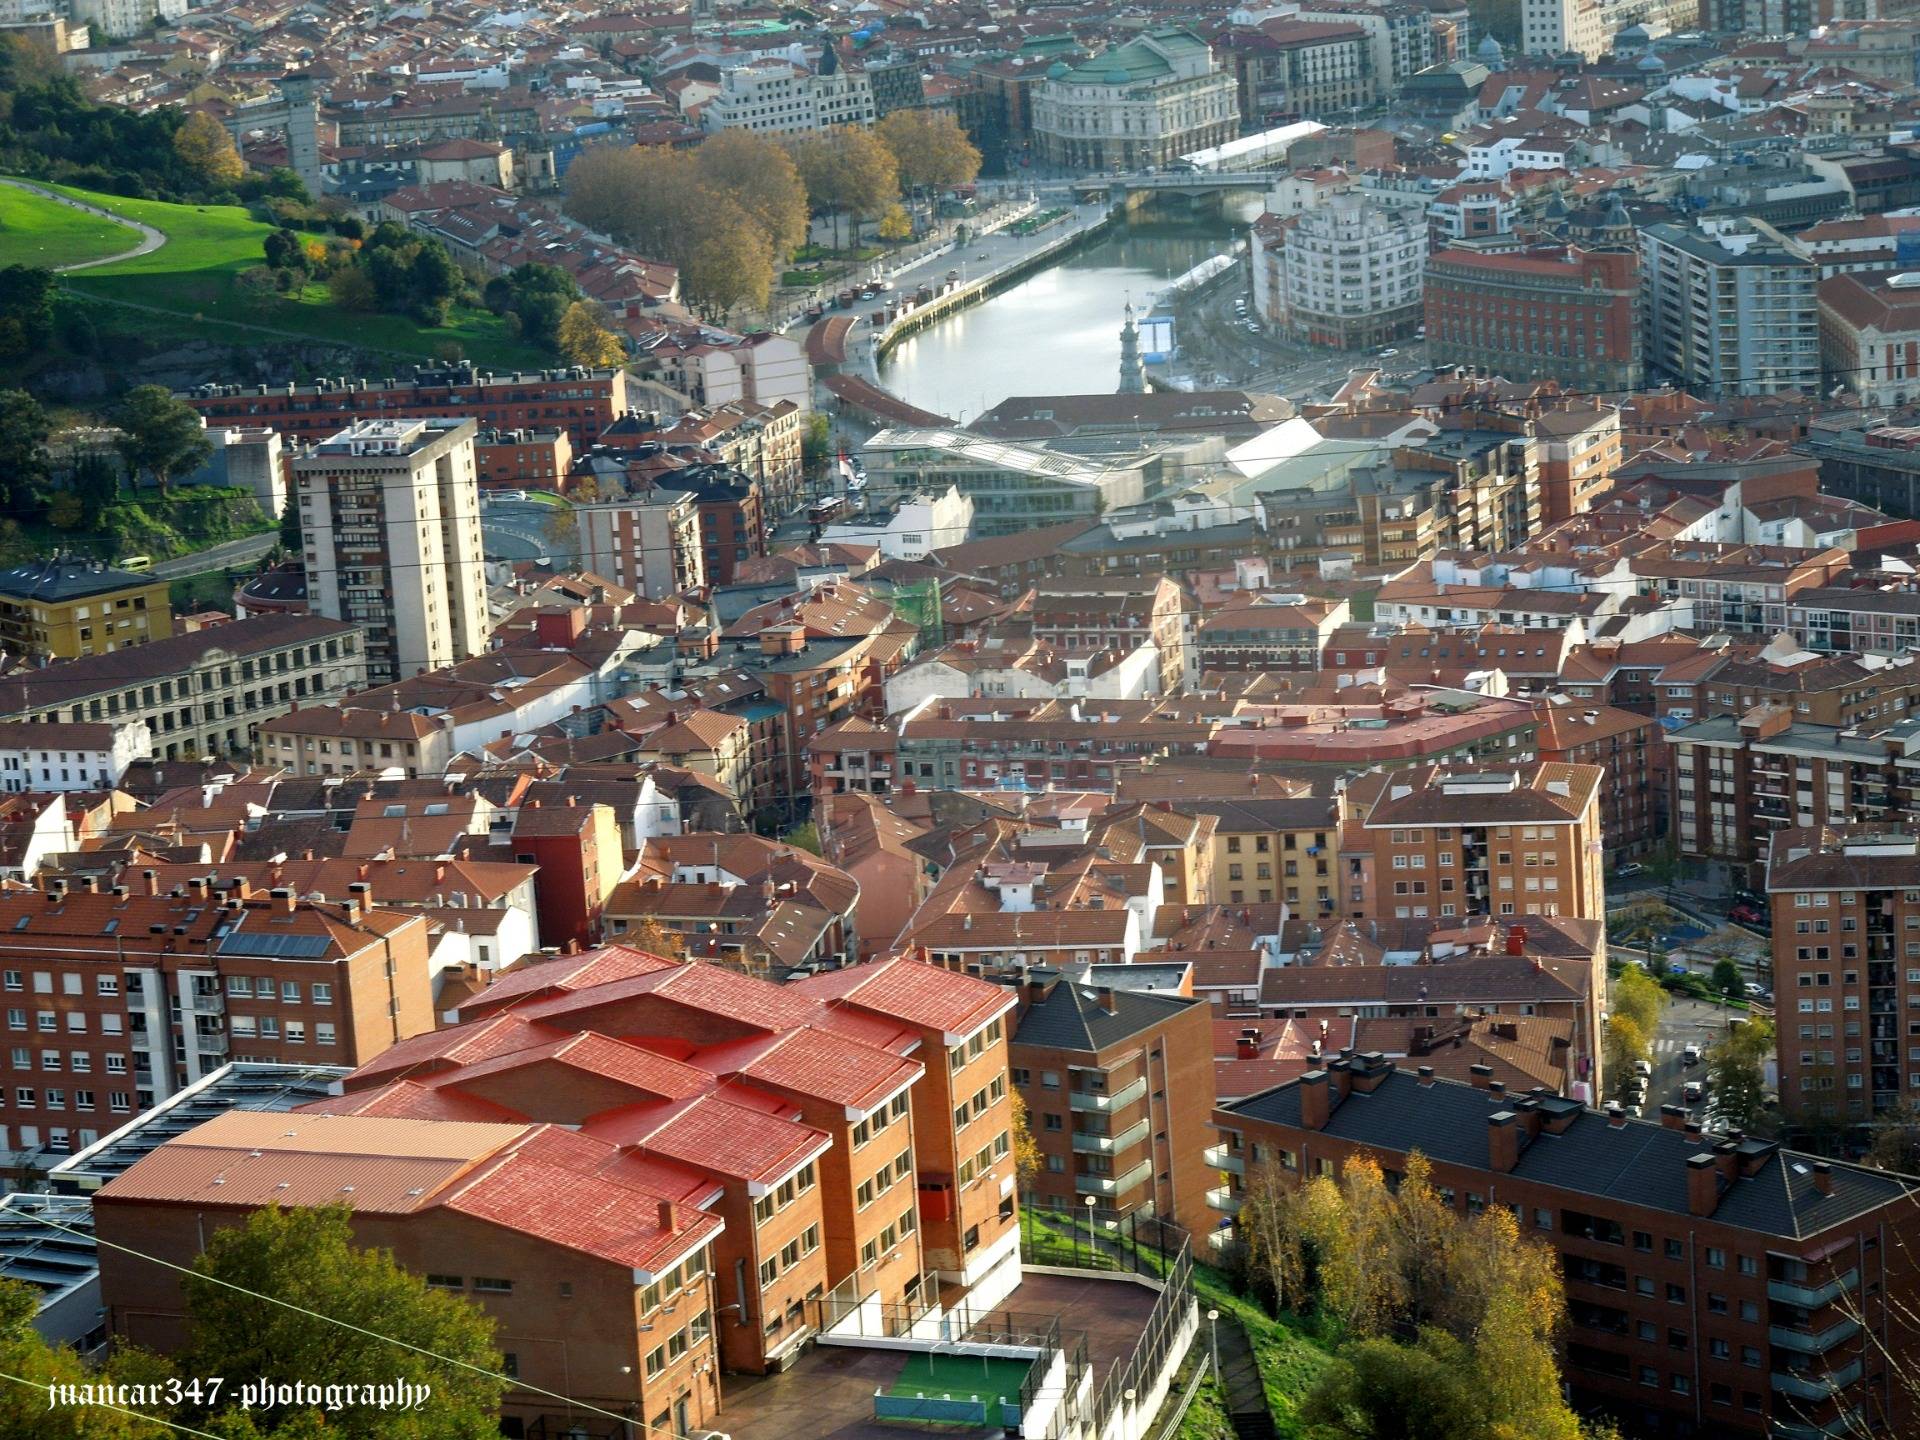 Artxanda: Bilbao from a bird's eye view